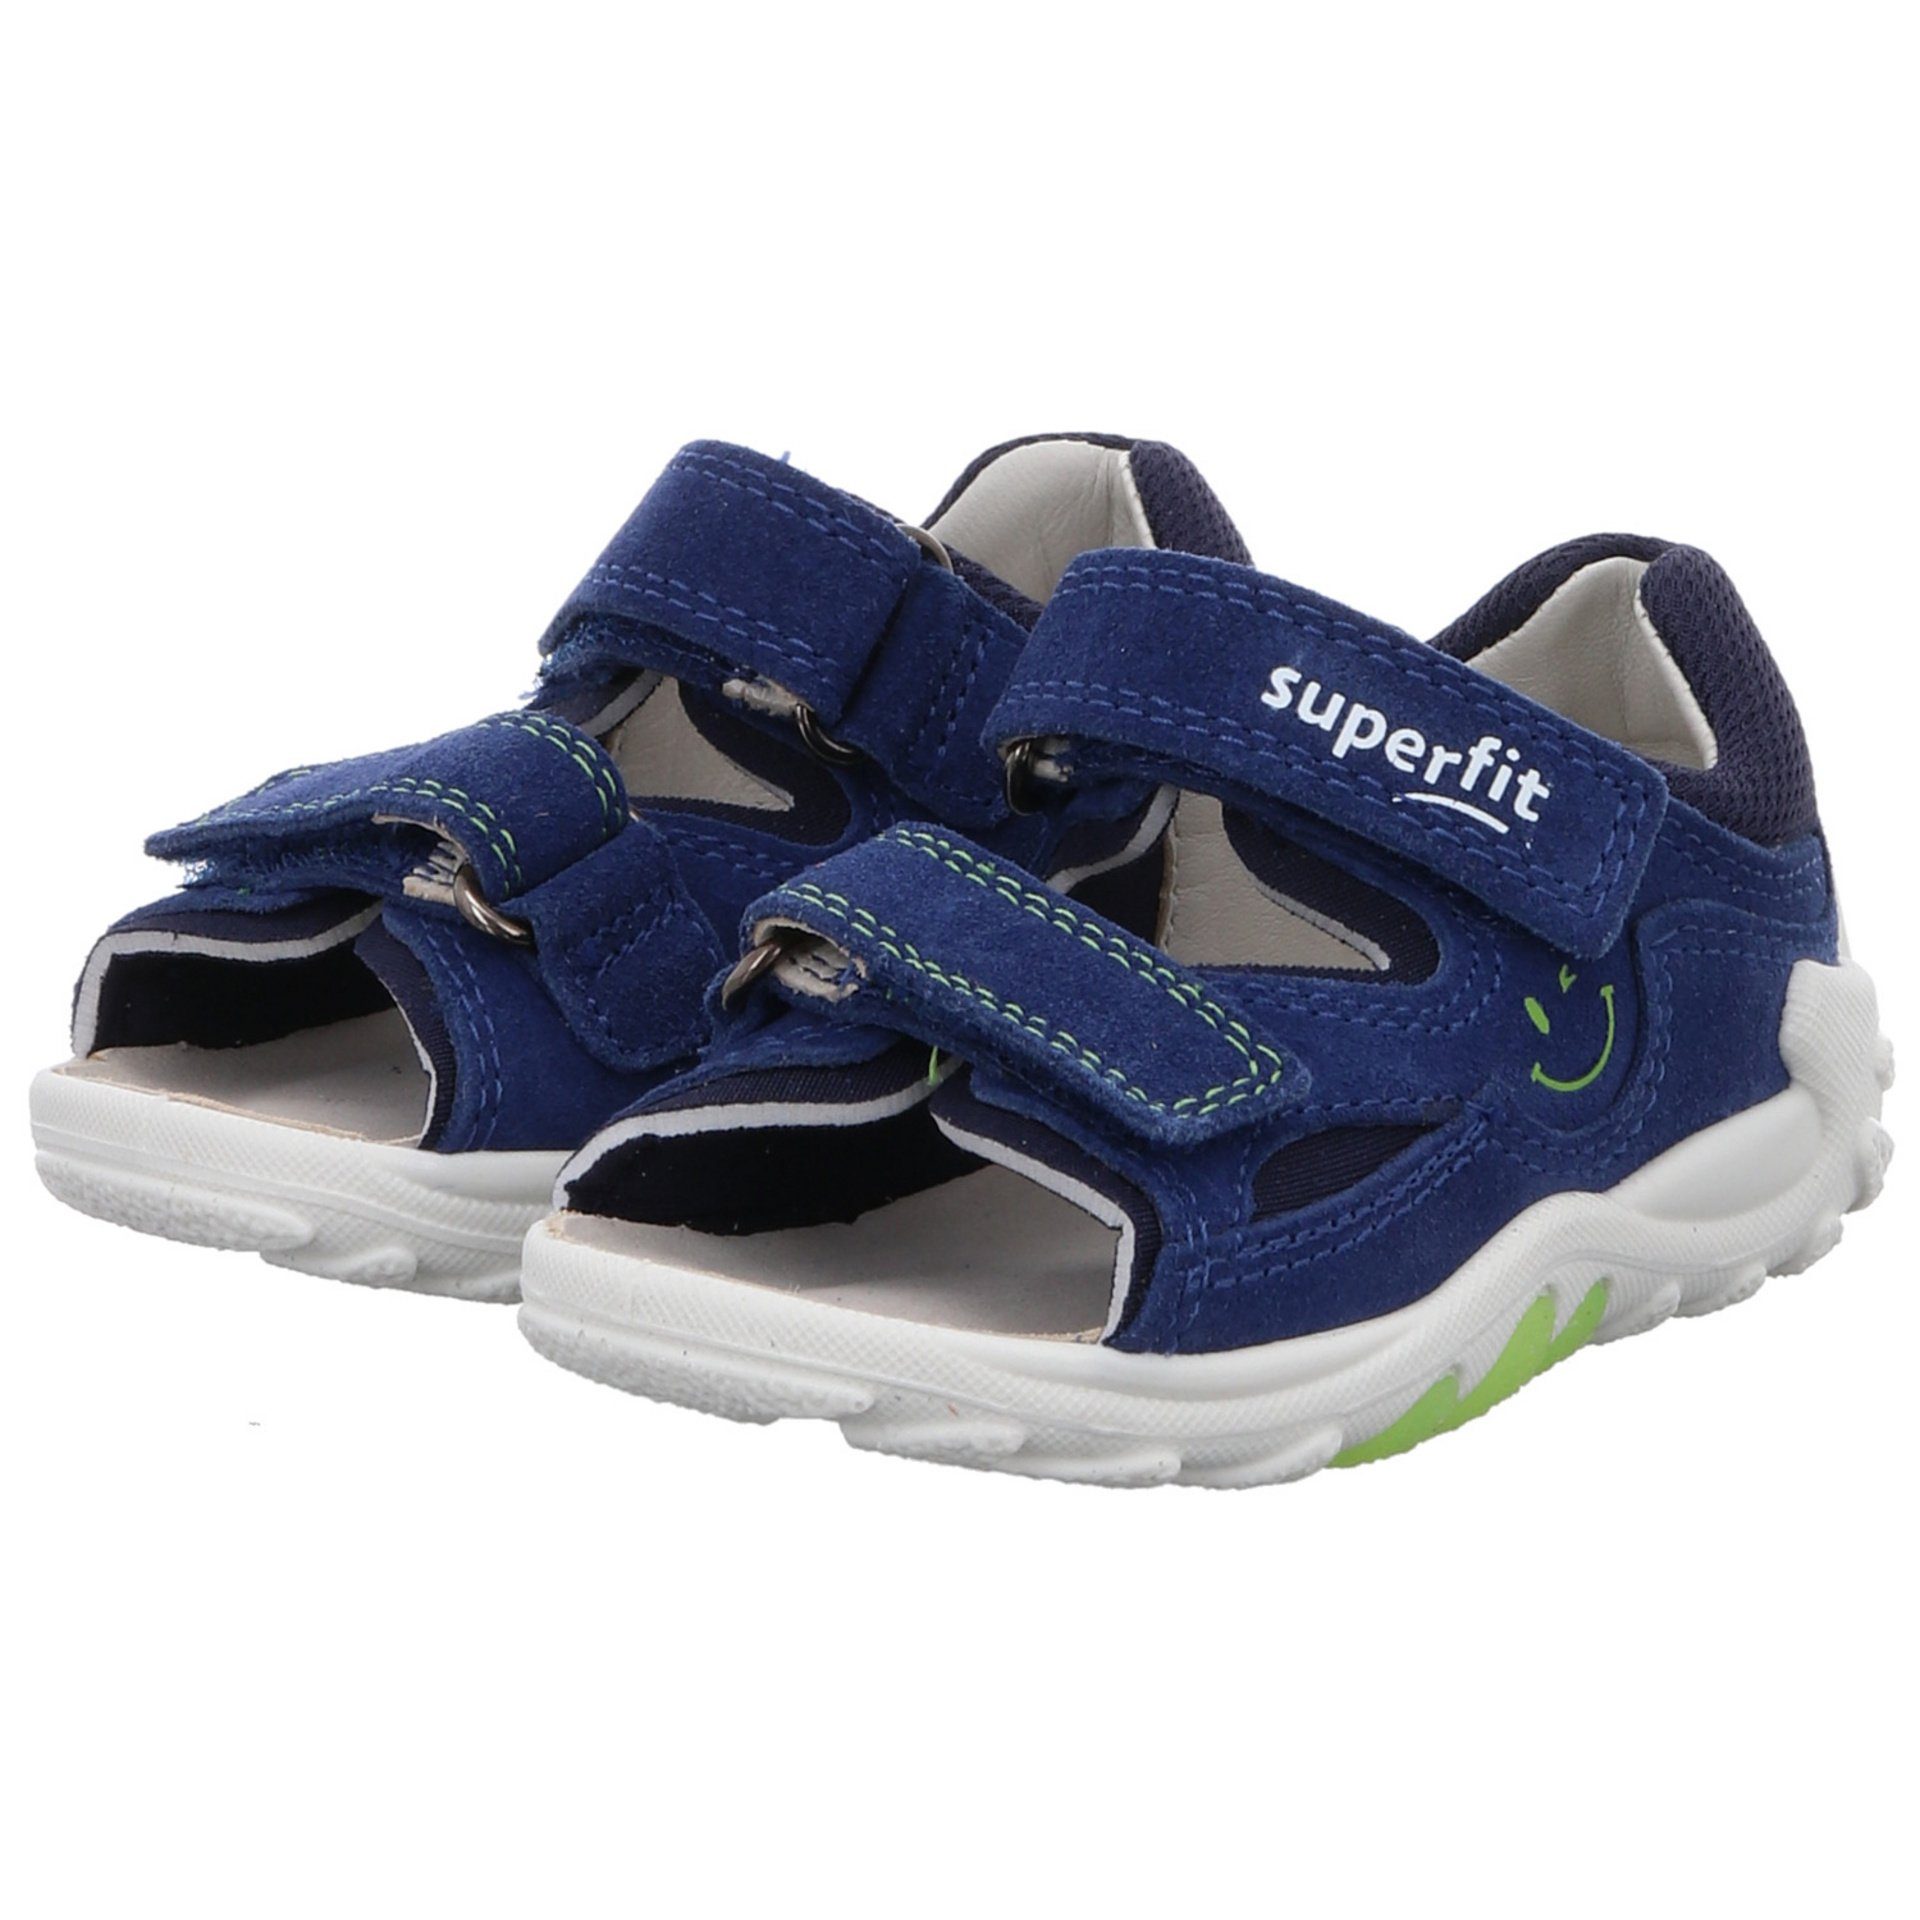 Superfit Jungen Sandalen Schuhe Flow Sandale Kinderschuhe Leder-/Textilkombination Sandale BLAU/HELLGRÜN